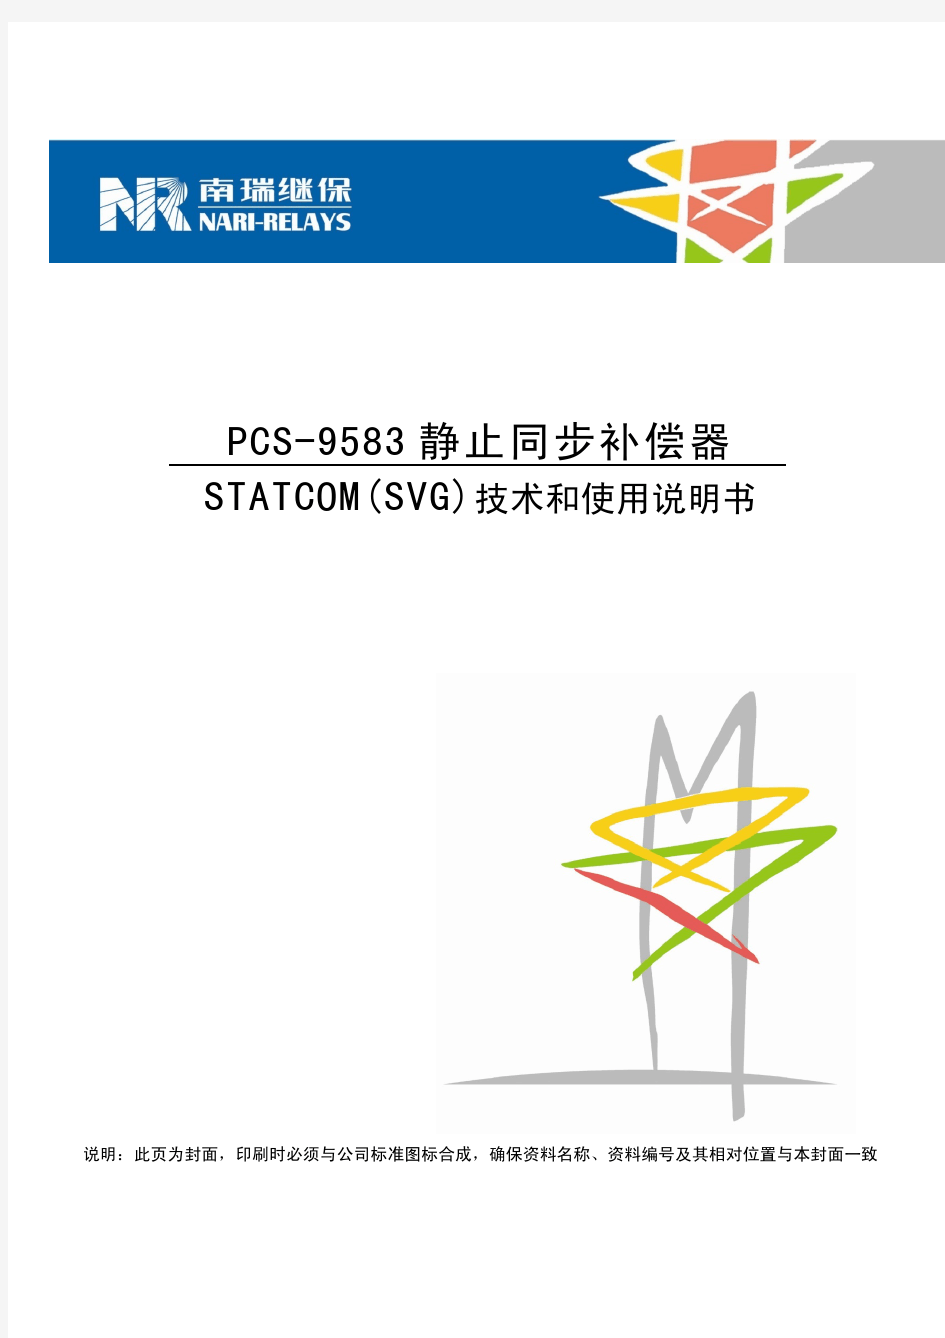 3 PCS9583静止同步补偿器STATCOM(SVG)说明书